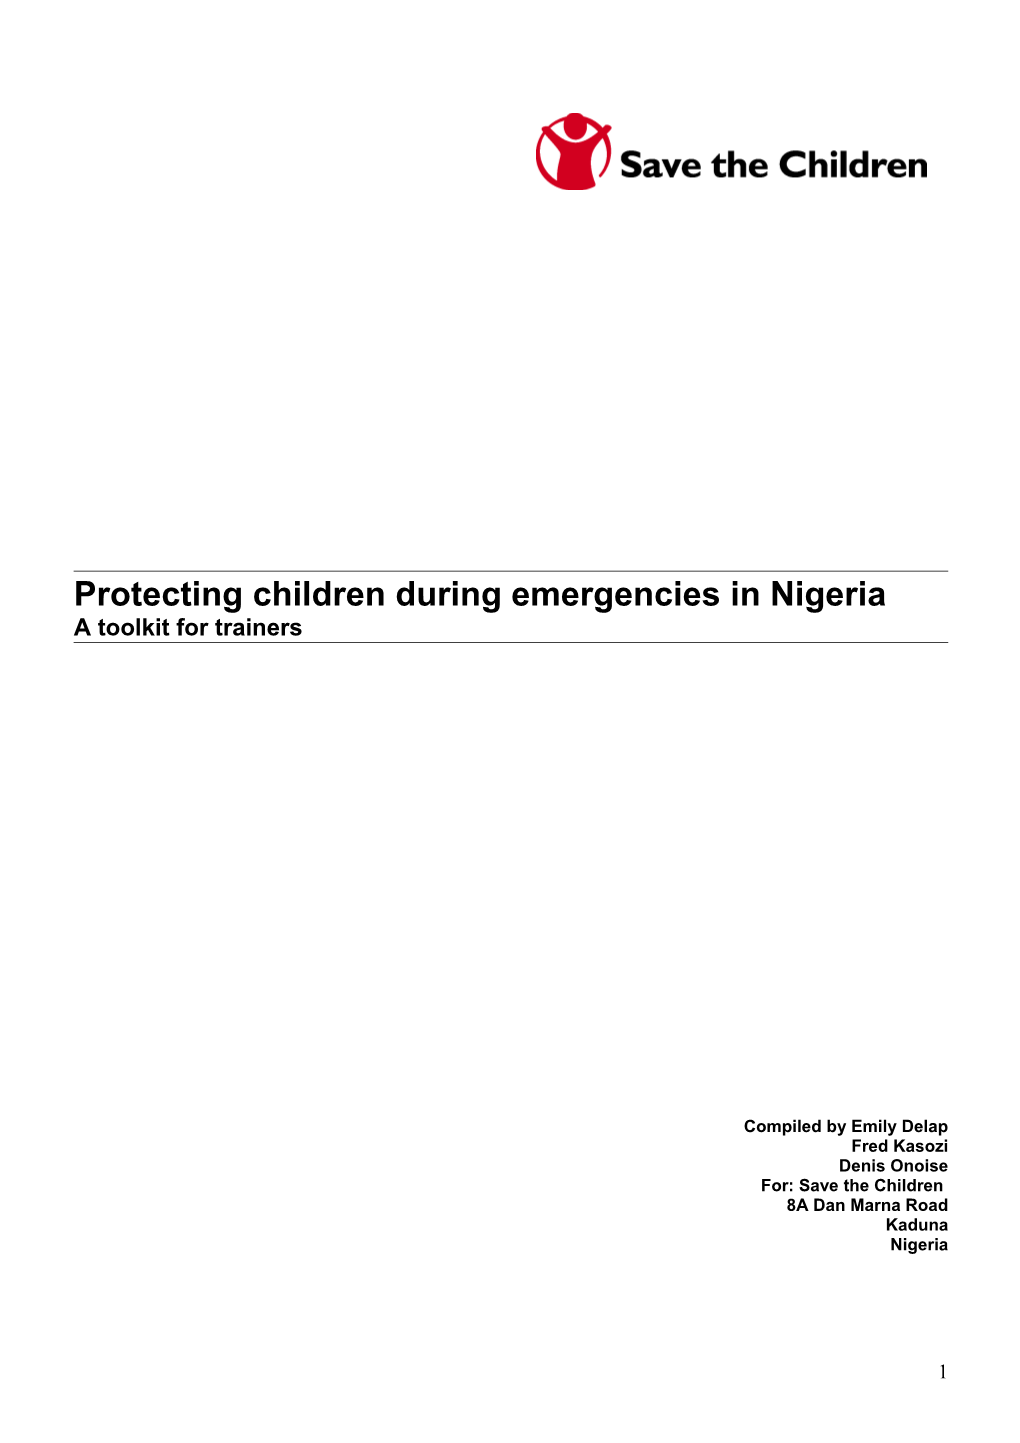 Protecting Children During Emergencies in Nigeria